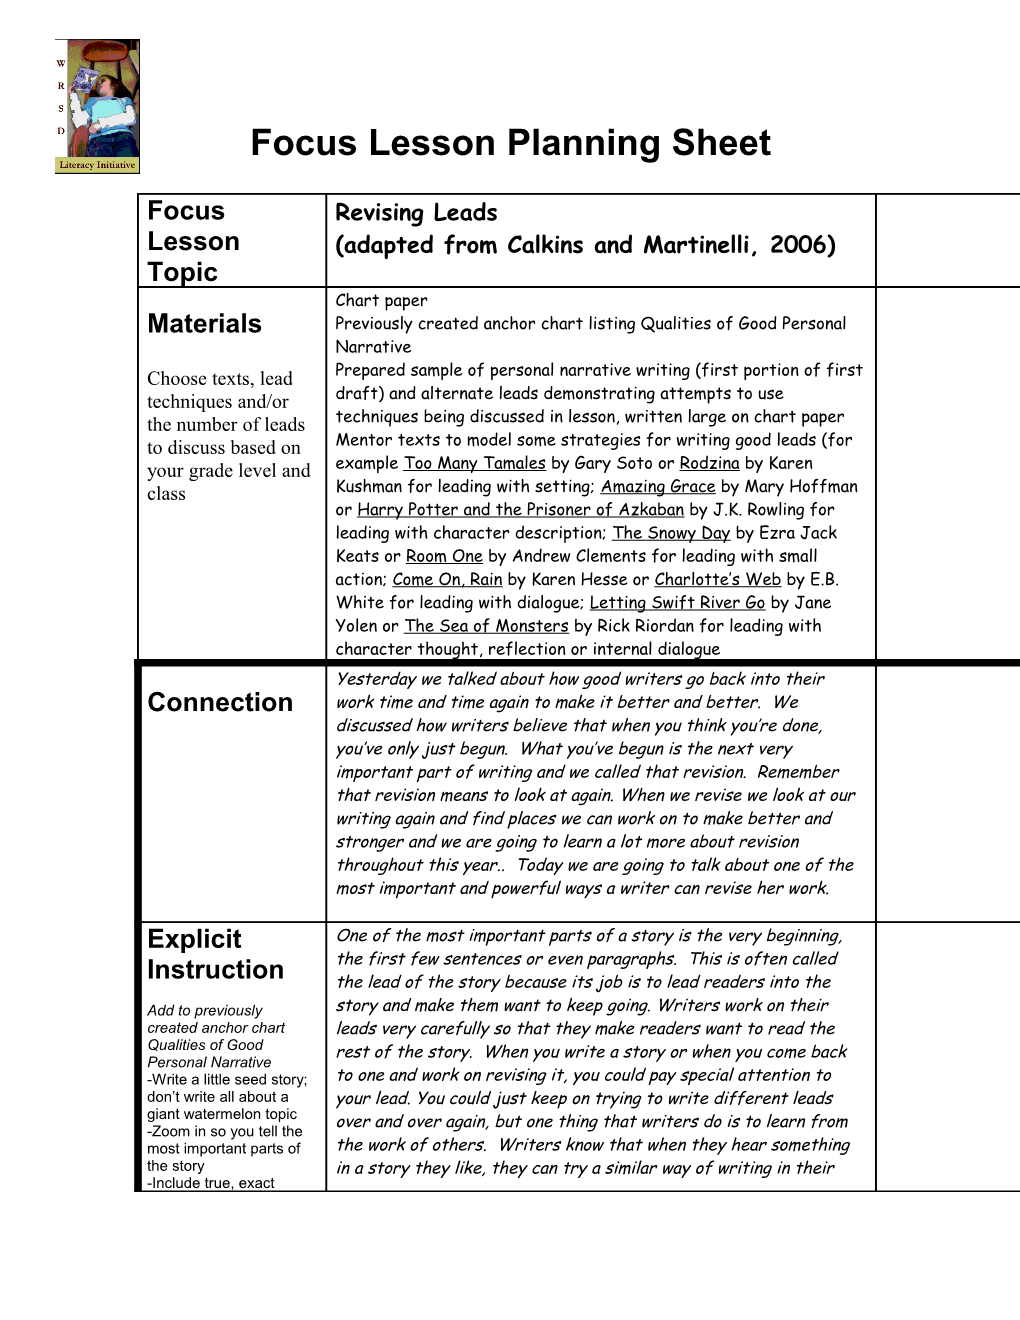 Focus Lesson Planning Sheet s4